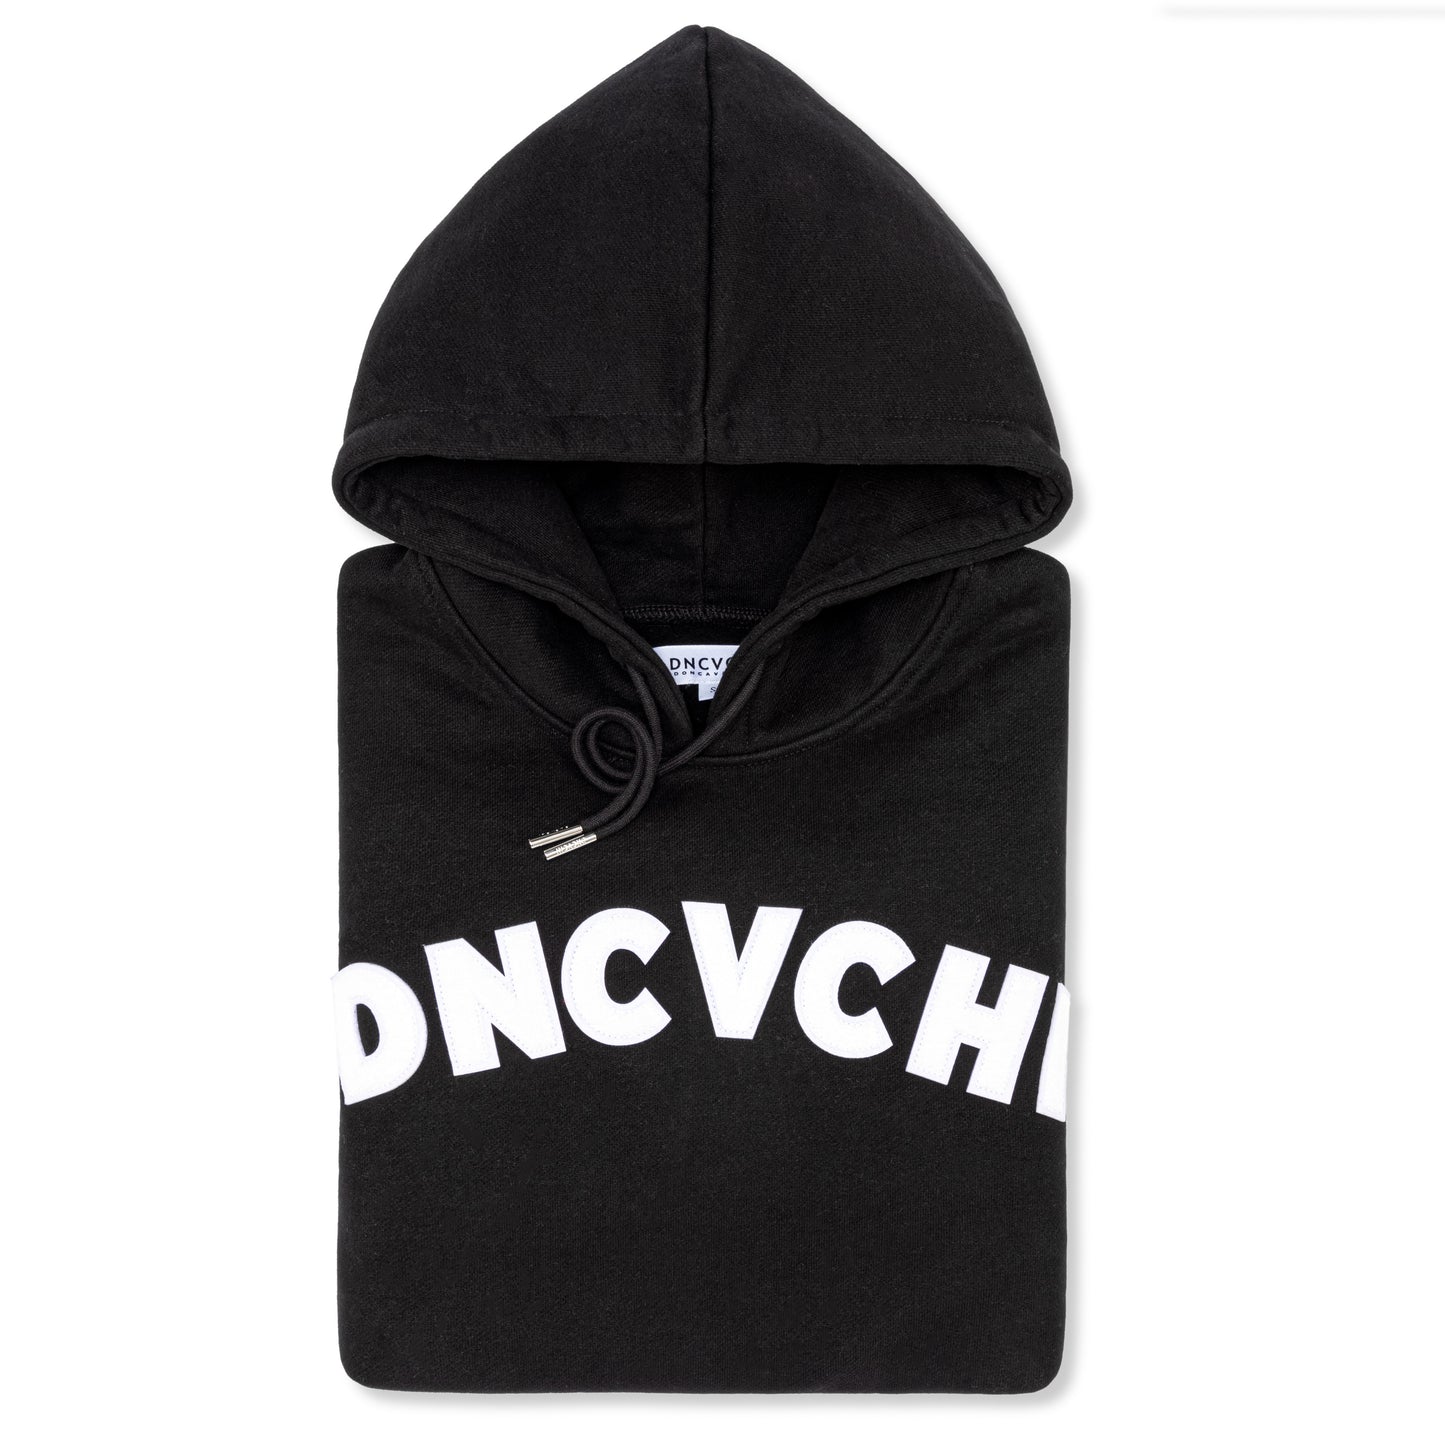 DNCVCHI CHENILLE HOODIE - BLACK/WHITE